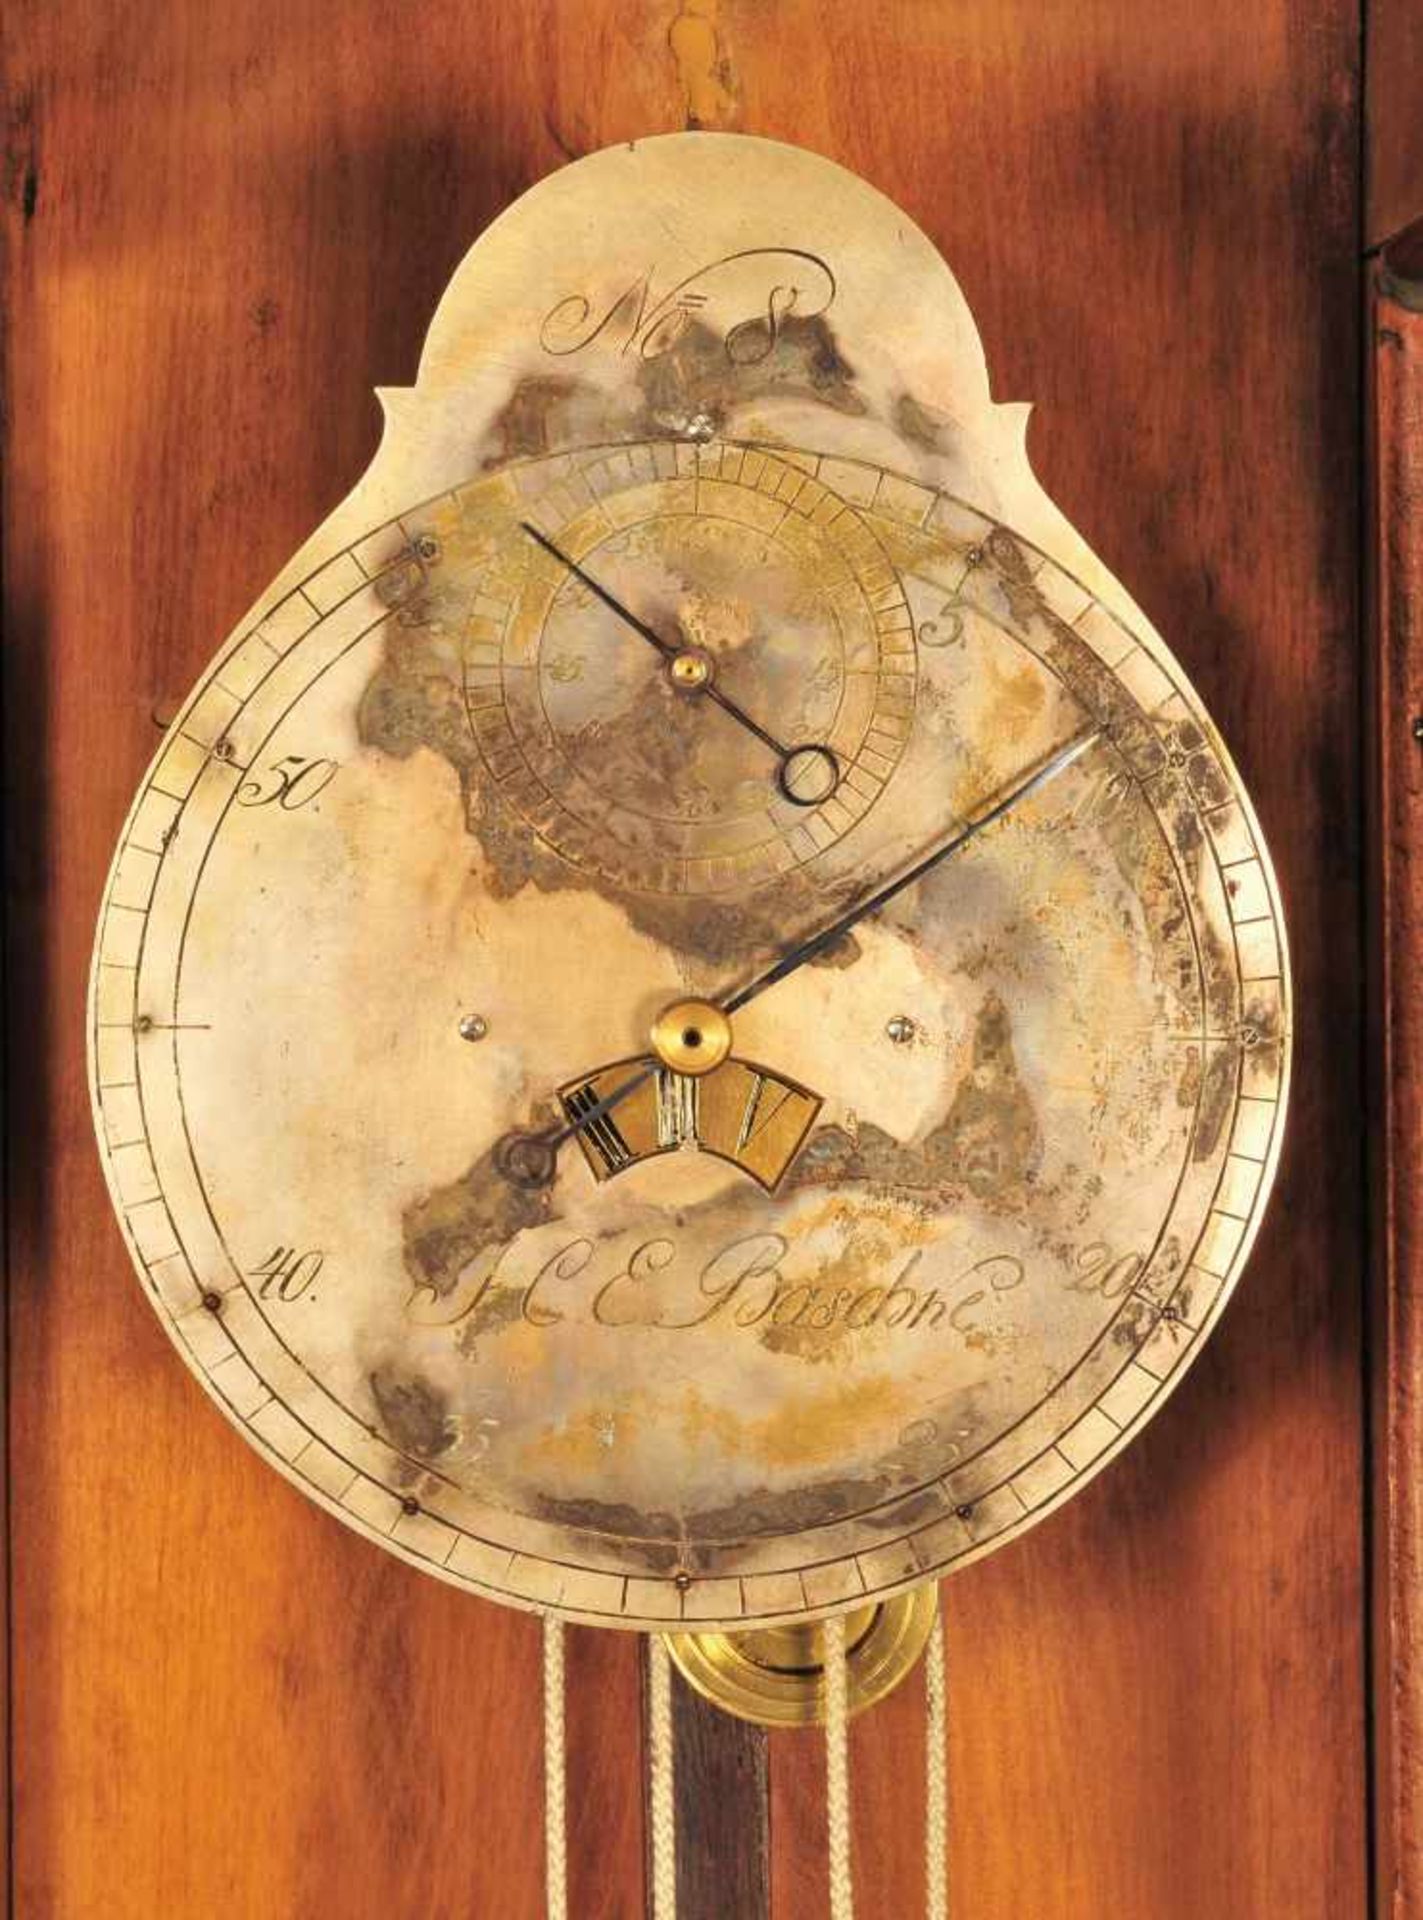 Precision pendulum lang case clock from Saxony mit cross-shape movement and Huygens'schem winding - Bild 4 aus 4